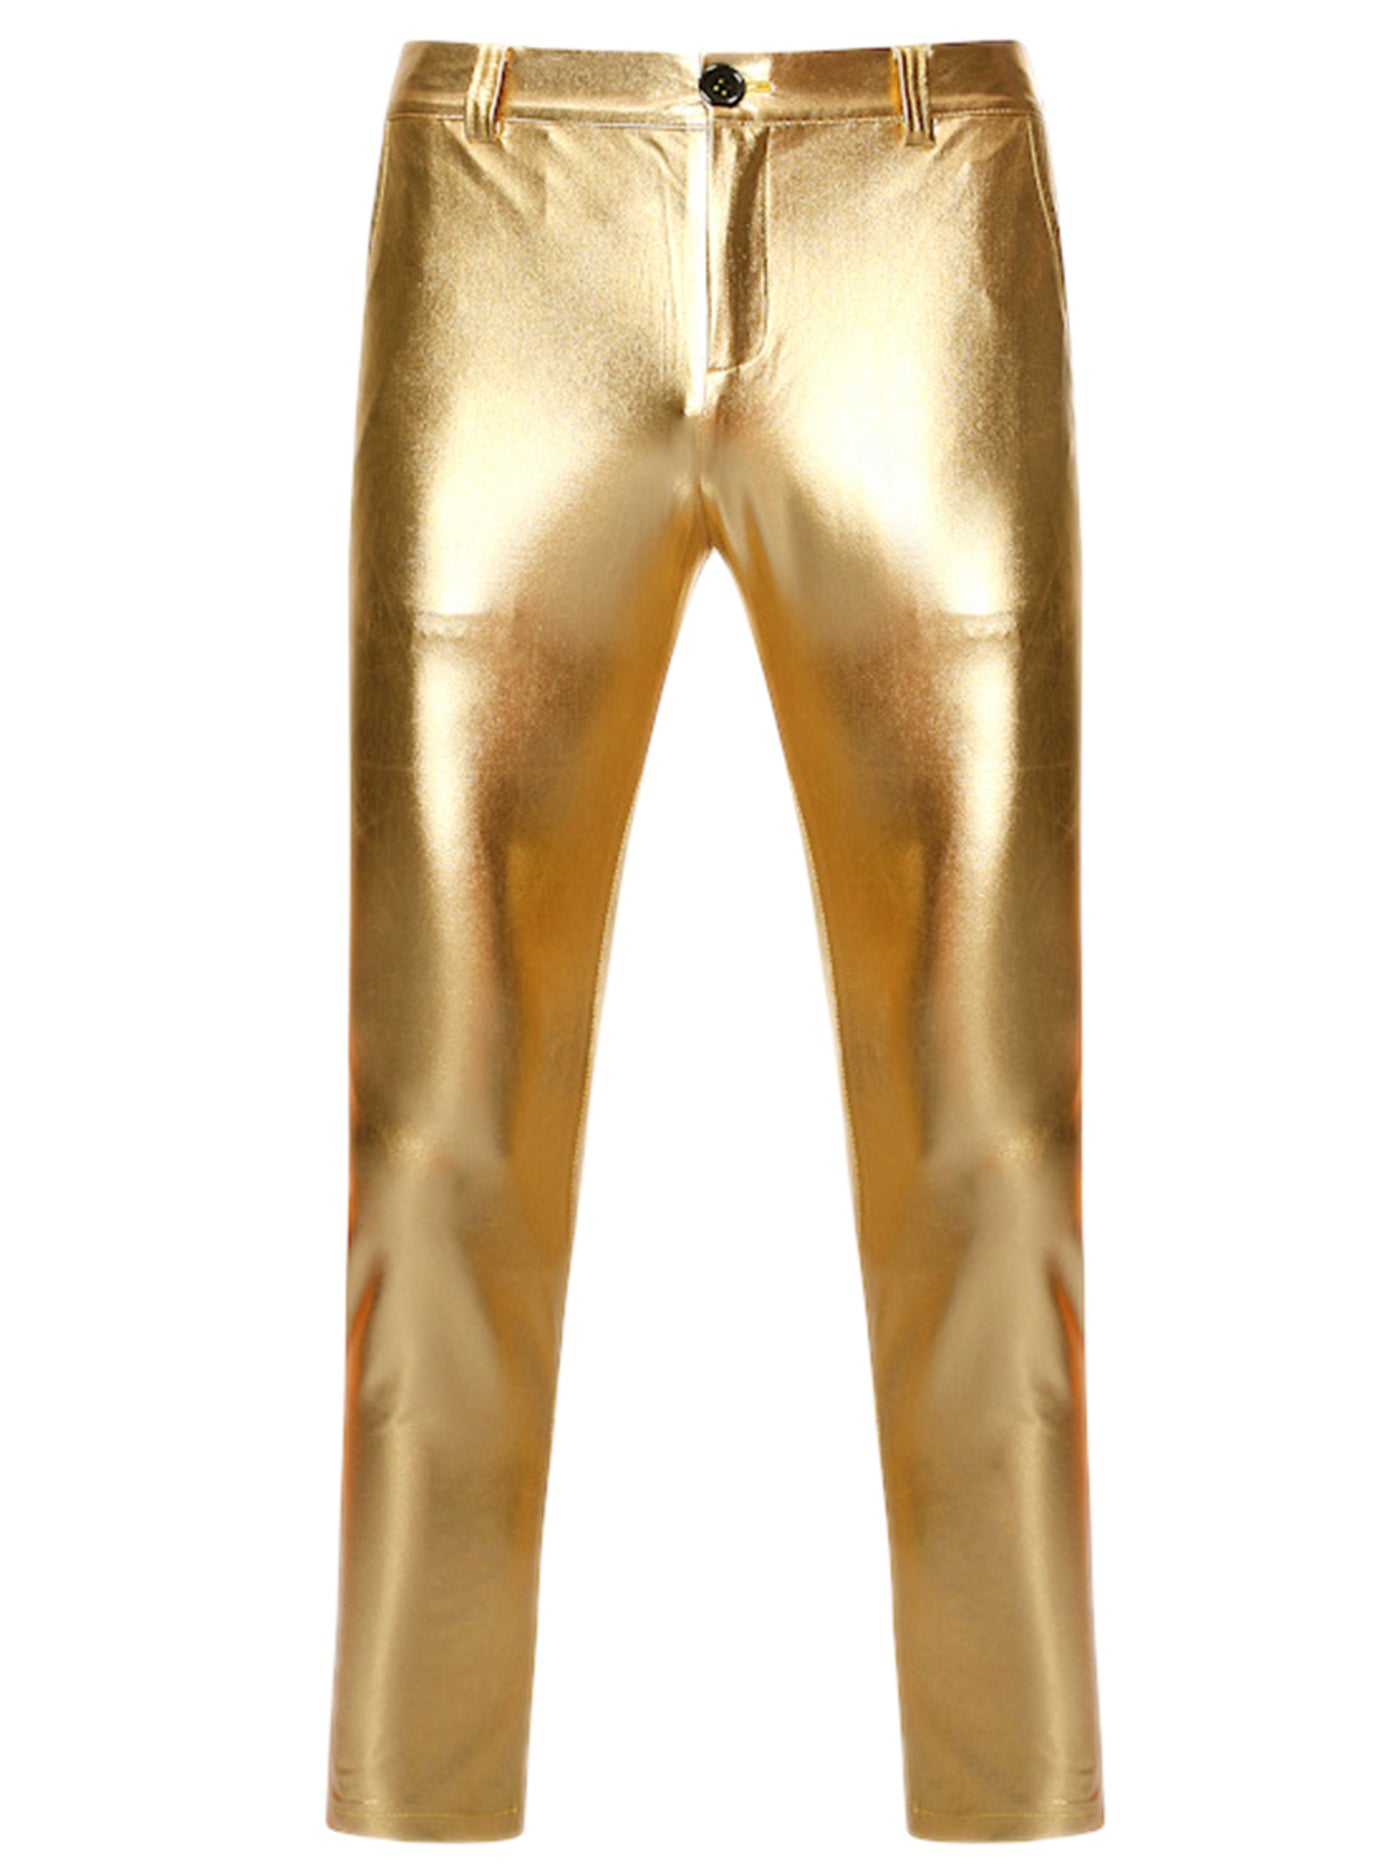 Bublédon Men's Metallic Disco Straight Leg Shiny Party Club Suit Pants